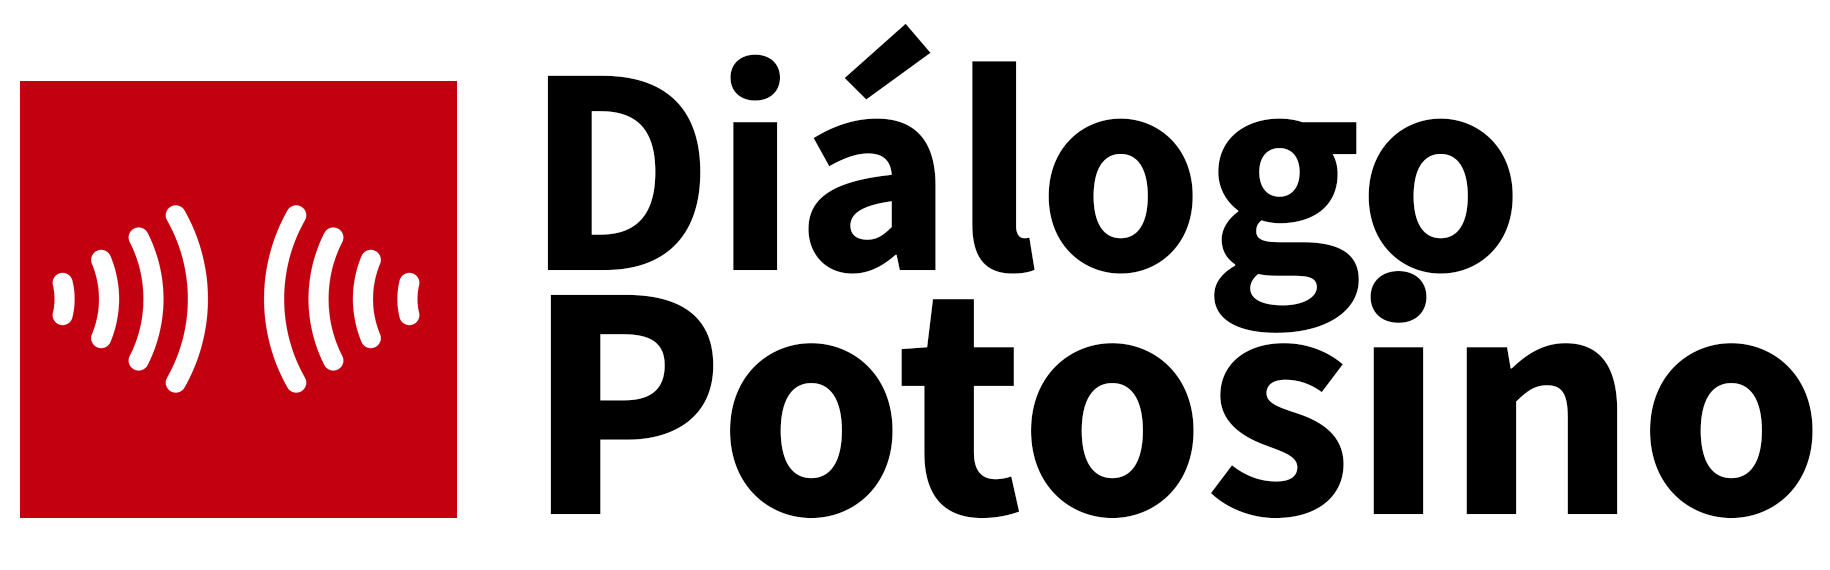 Diálogo Potosino